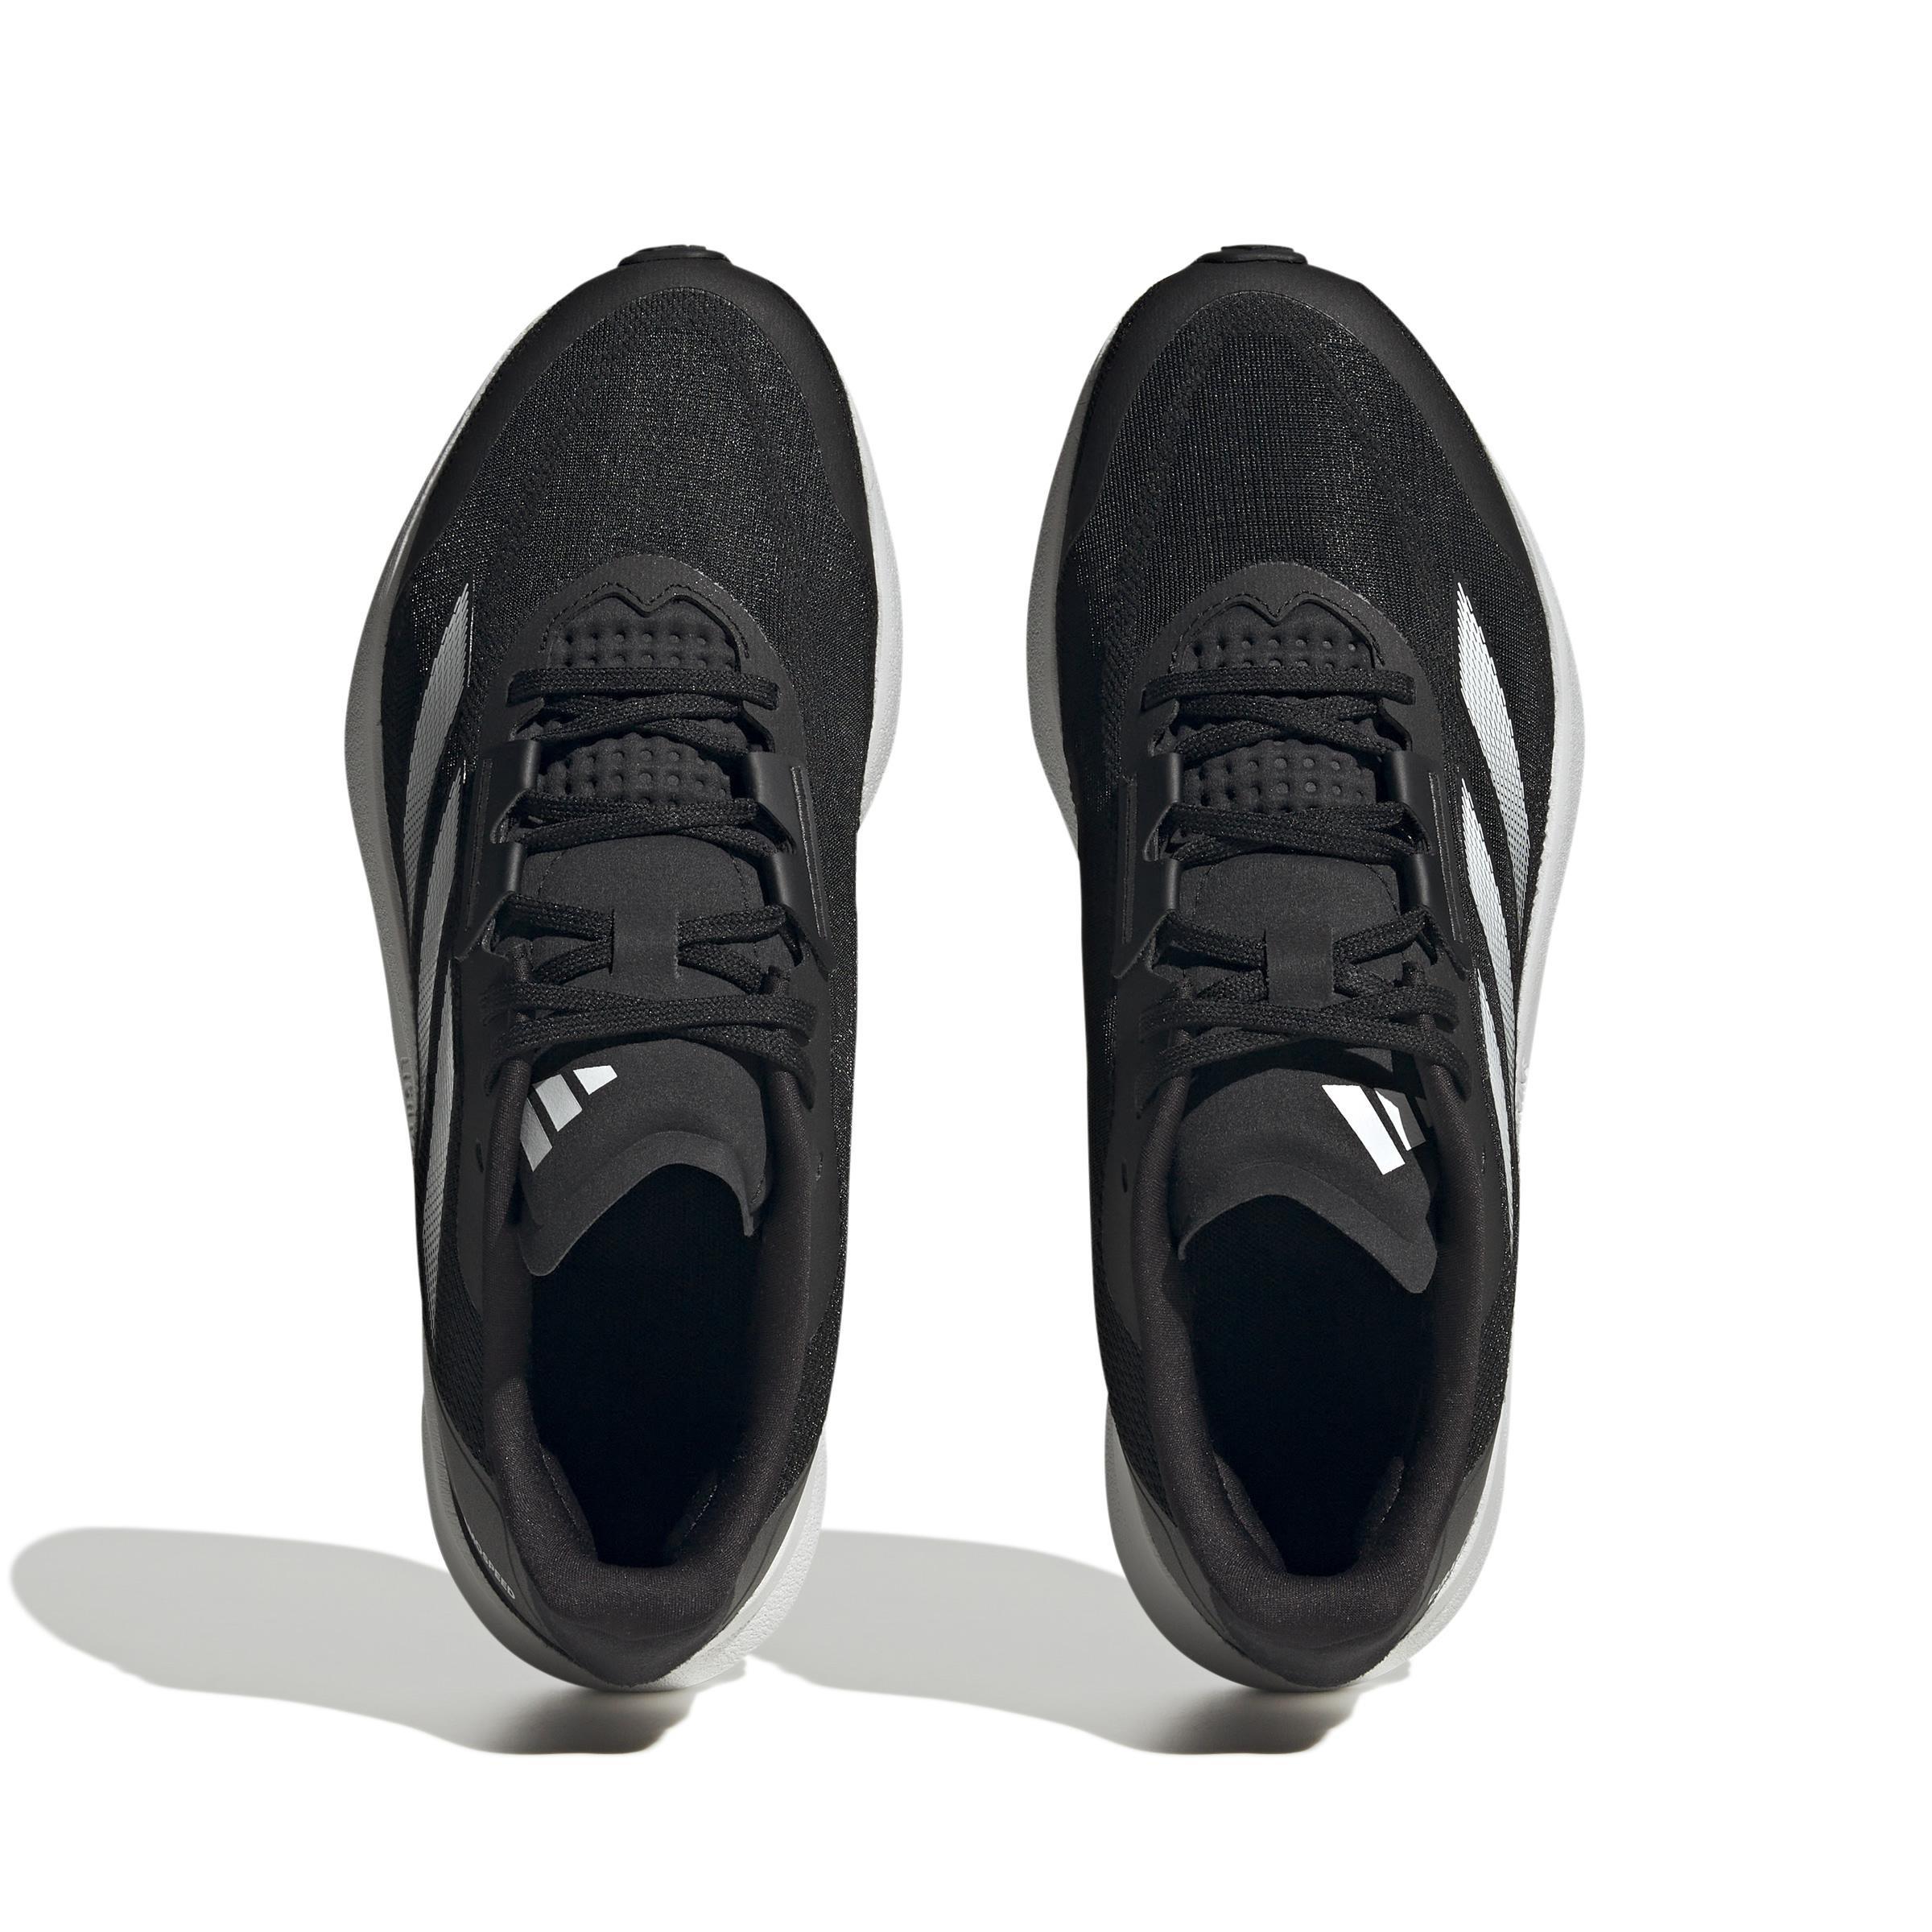 adidas - Men Duramo Speed Shoes, Black